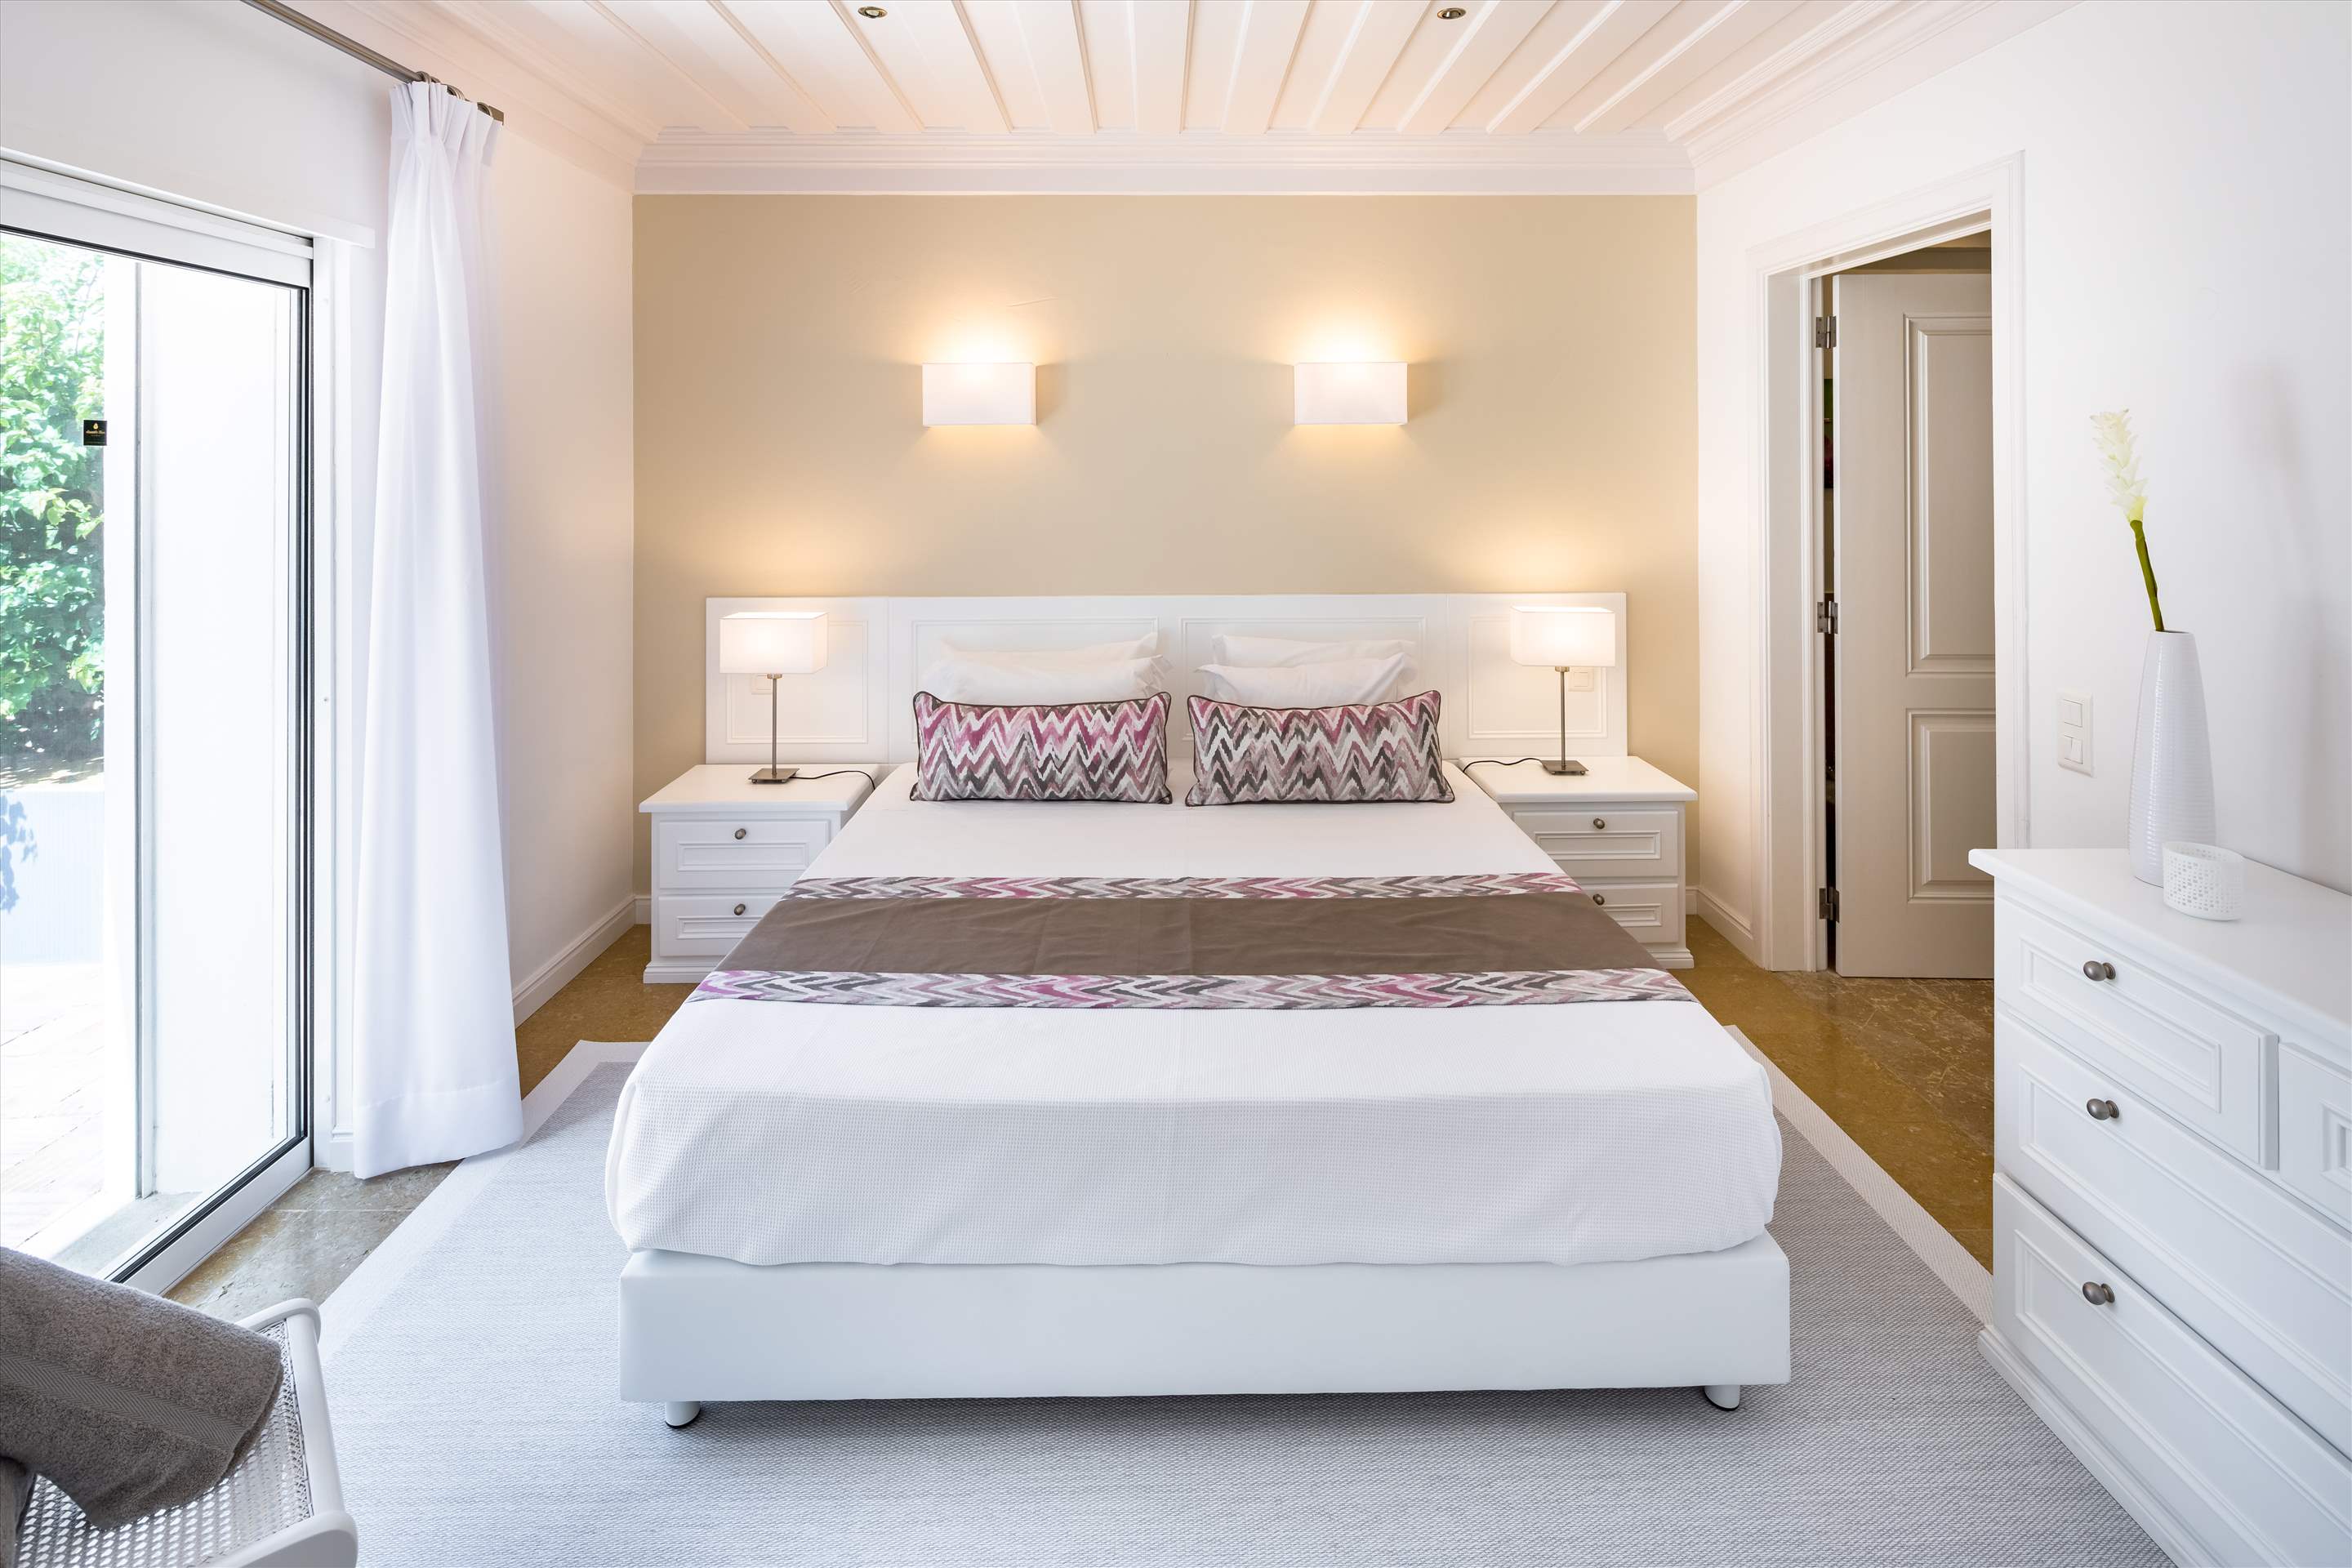 Casa da Montanha, 15-16 persons, 9 bedroom villa in Vilamoura Area, Algarve Photo #21